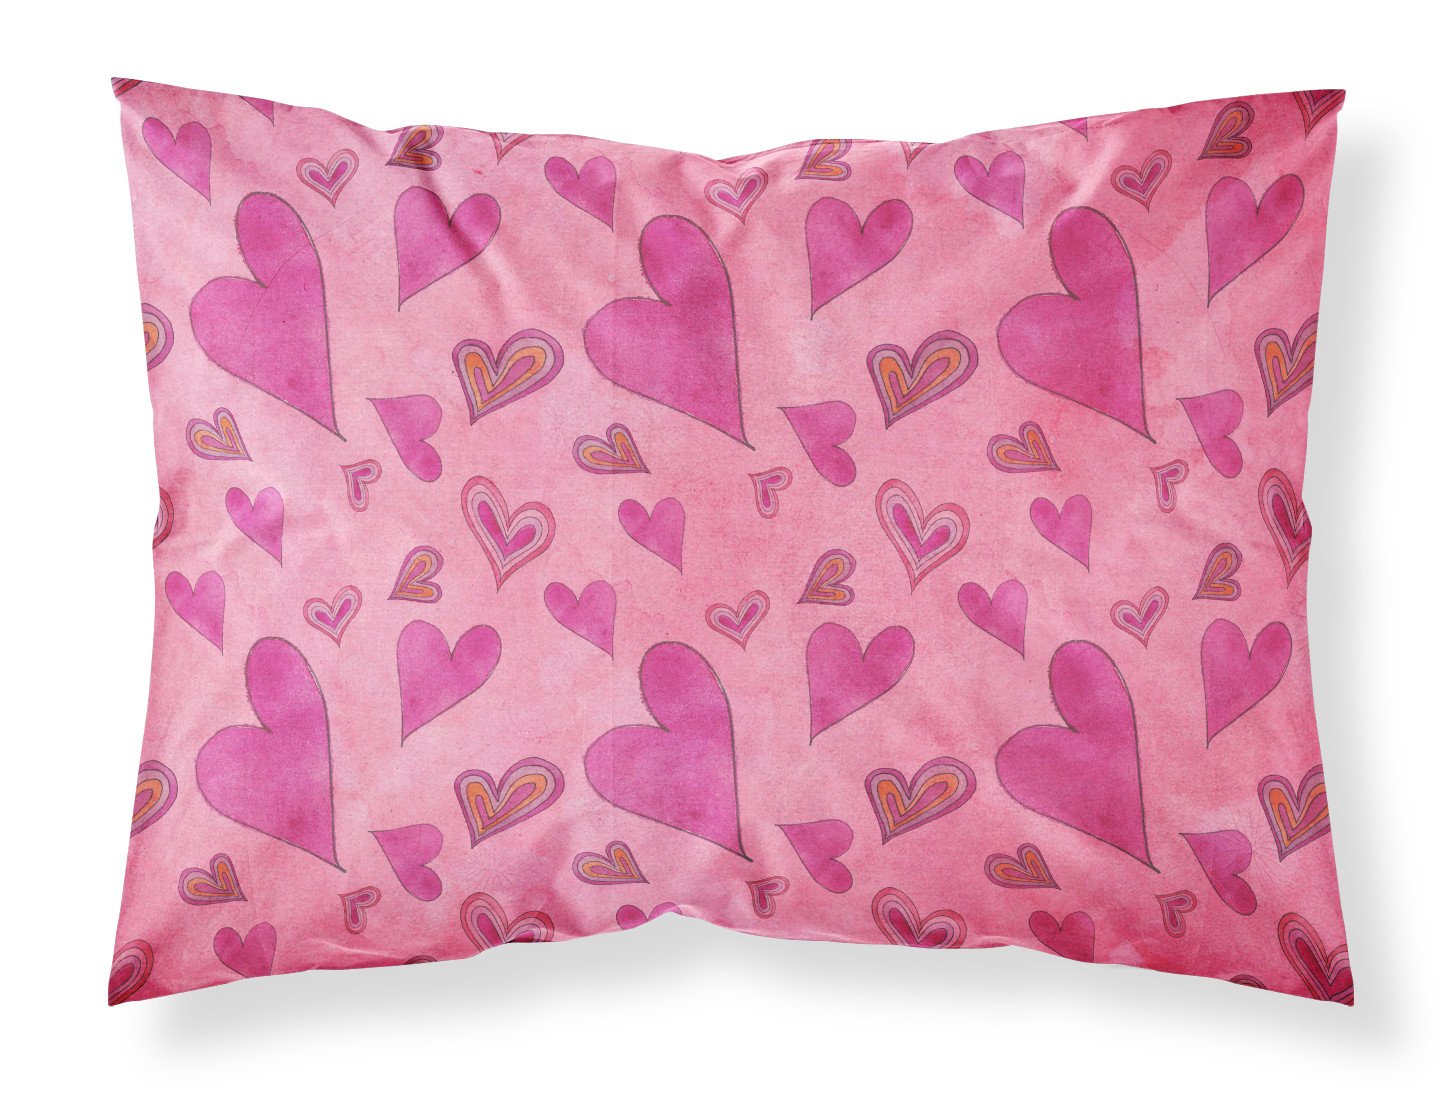 Watercolor Love and Hearts Fabric Standard Pillowcase BB7550PILLOWCASE by Caroline's Treasures